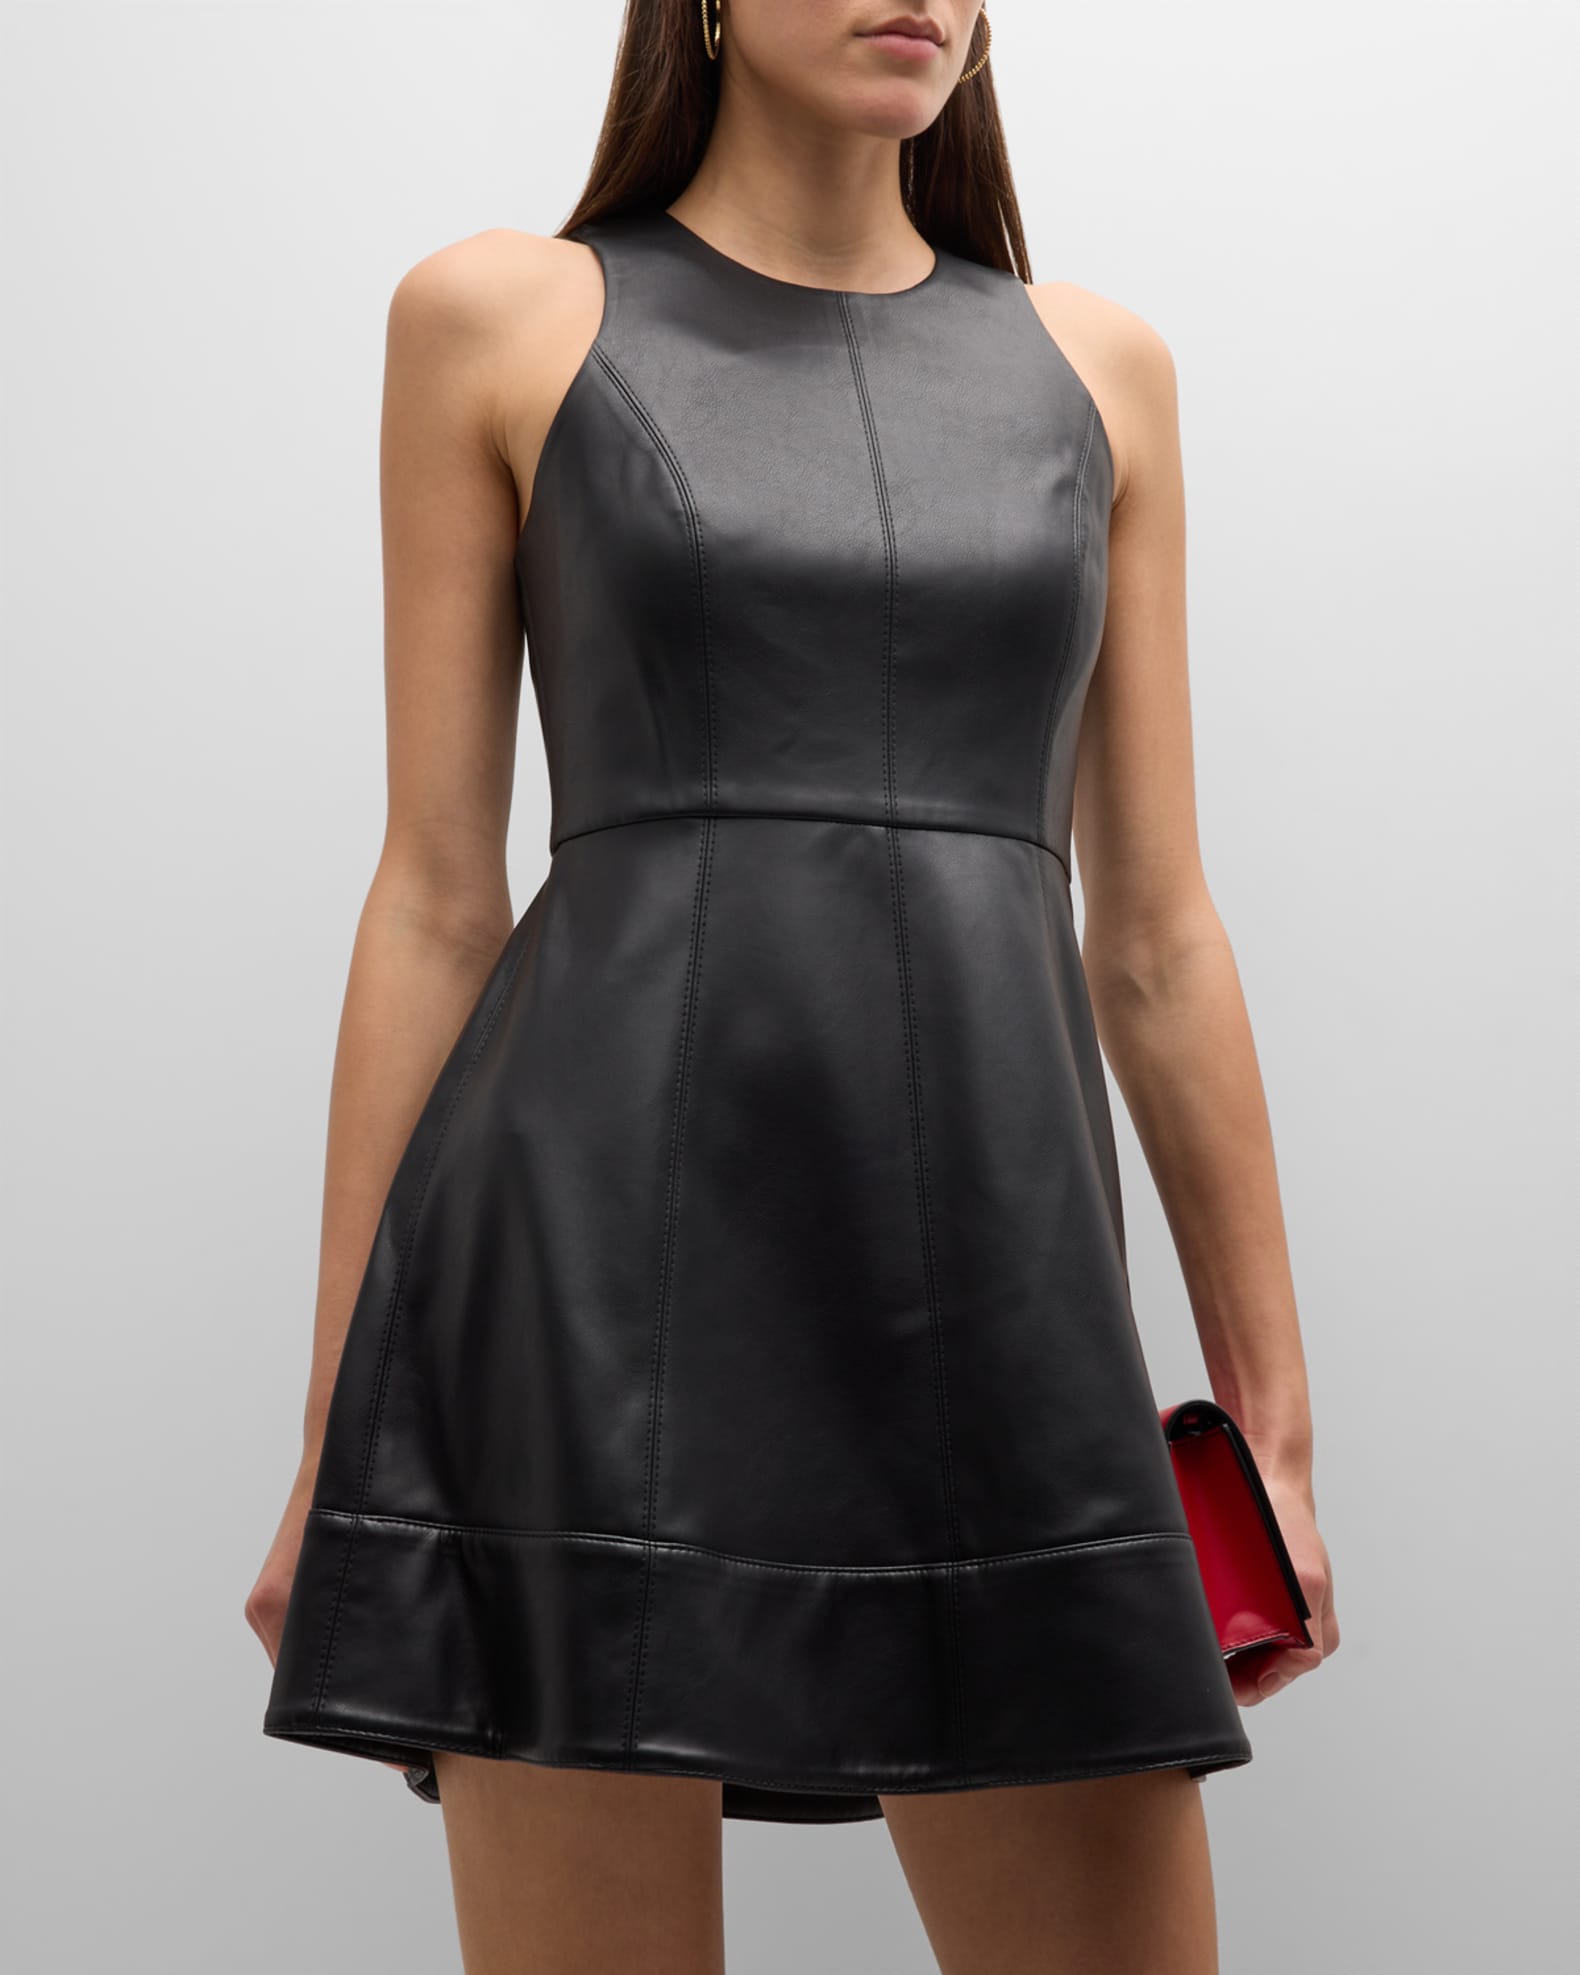 Black Vegan Leather Dress - Sleeveless Dress - A-Line Mini Dress